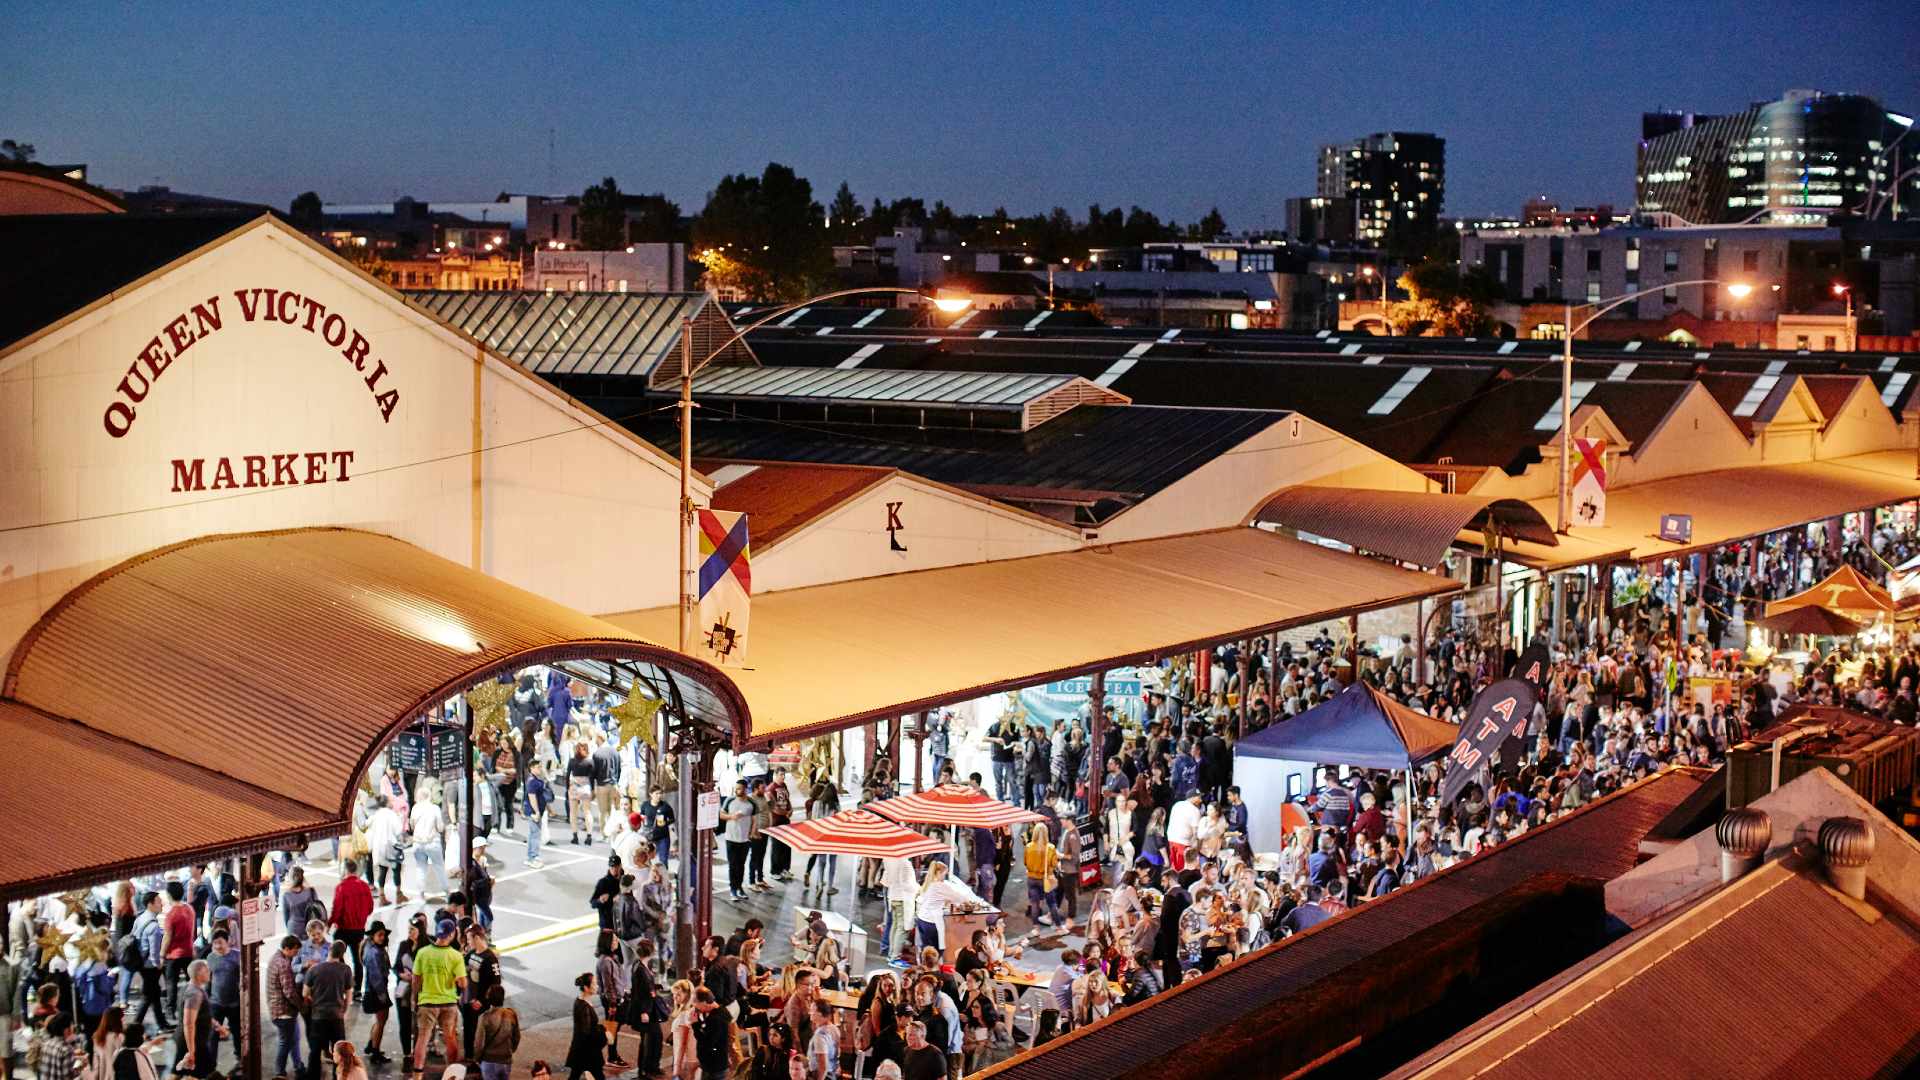 Queen Victoria Market - Summer Night Market.